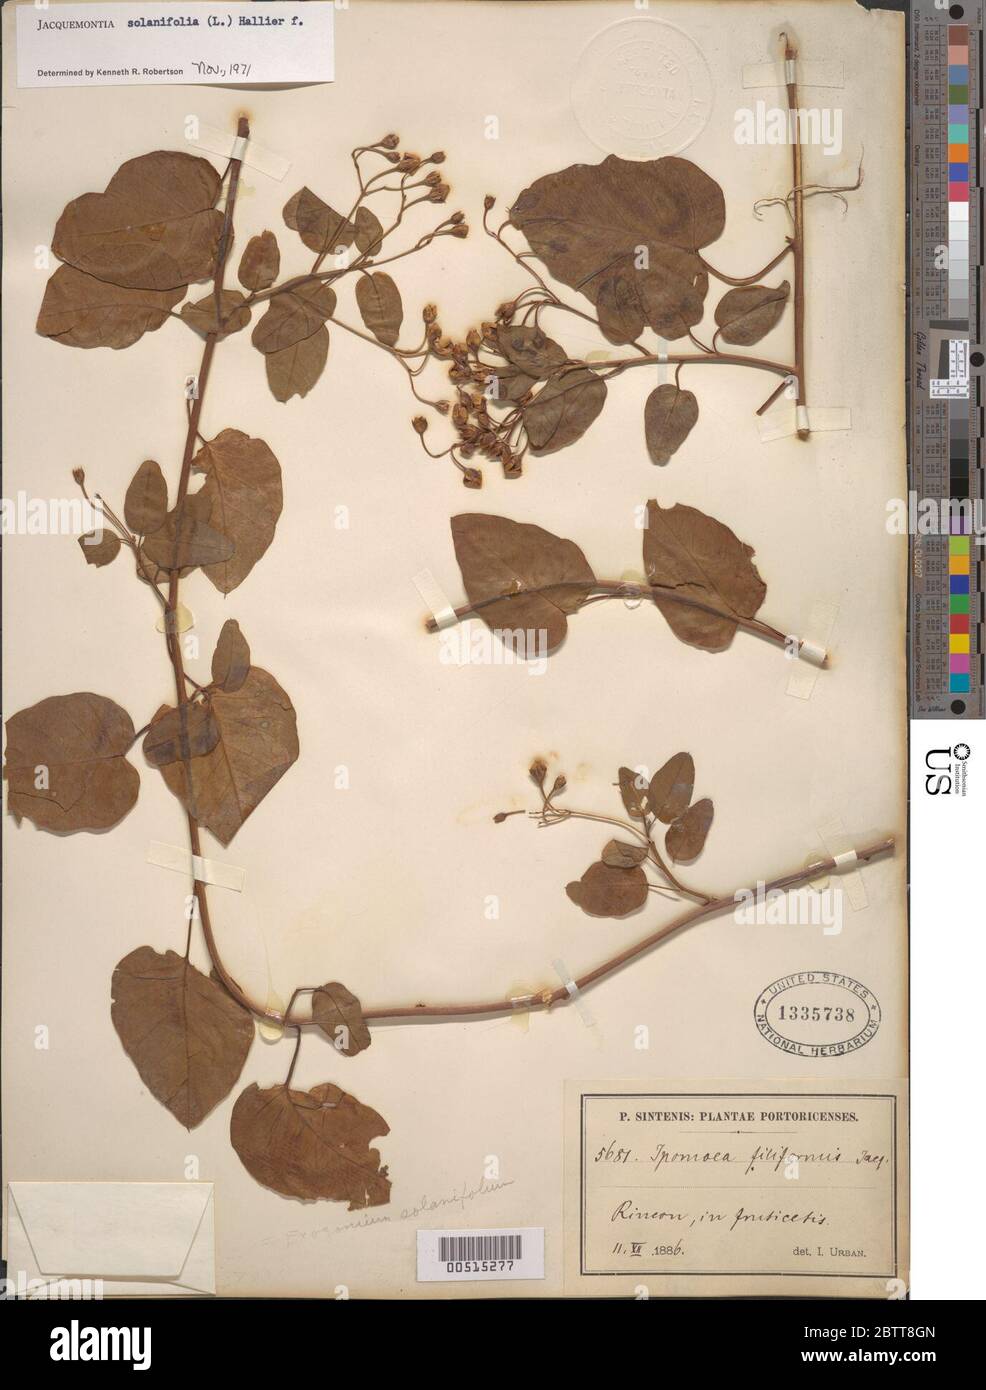 Jacquemontia solanifolia L Hallier f. Stock Photo